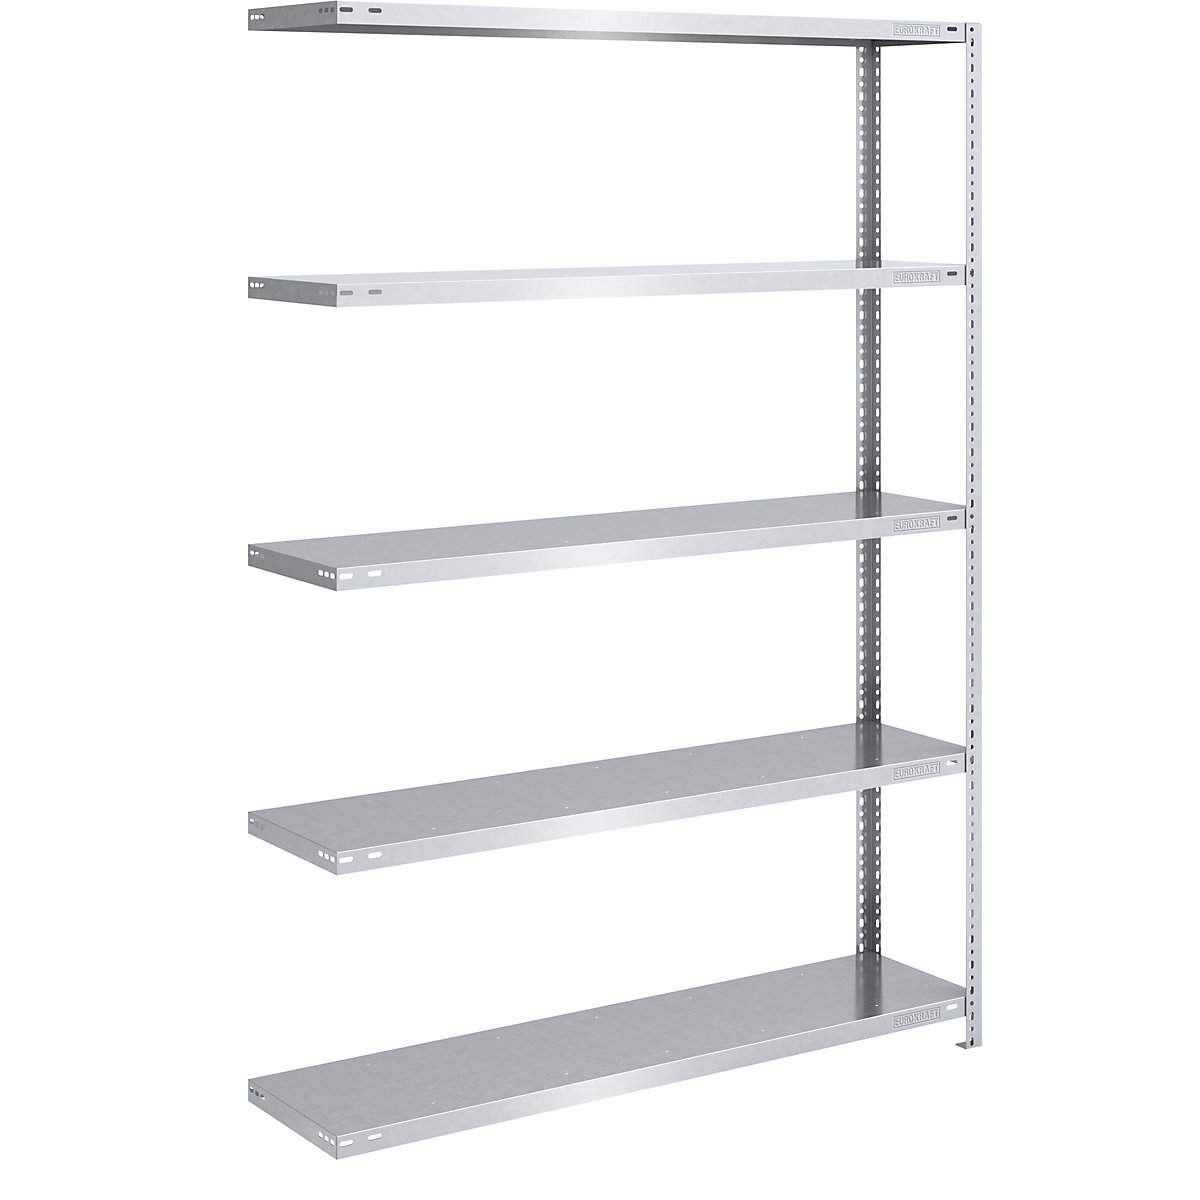 Bolt-together shelf unit, light duty, zinc plated – eurokraft pro, shelf unit height 2000 mm, shelf width 1300 mm, depth 400 mm, extension shelf unit-6